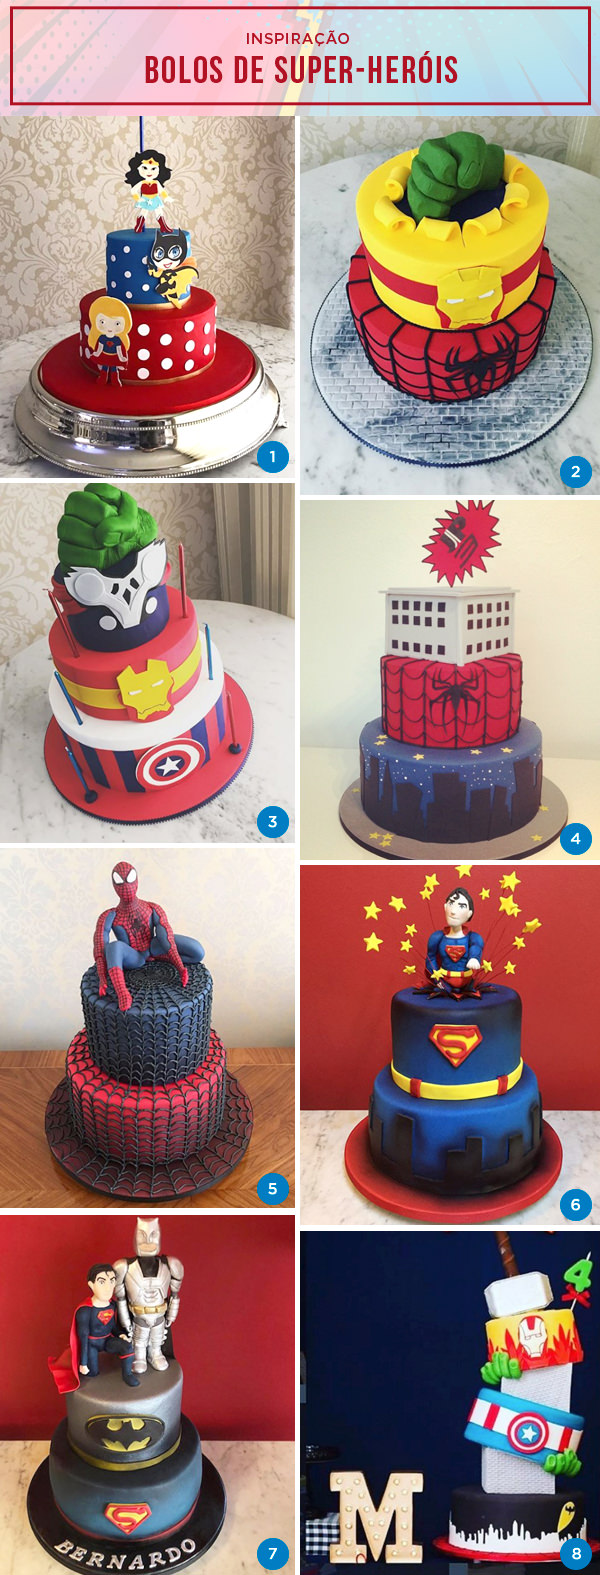 8 bolos de super-heróis para a festa infantil - Constance Zahn | Babies